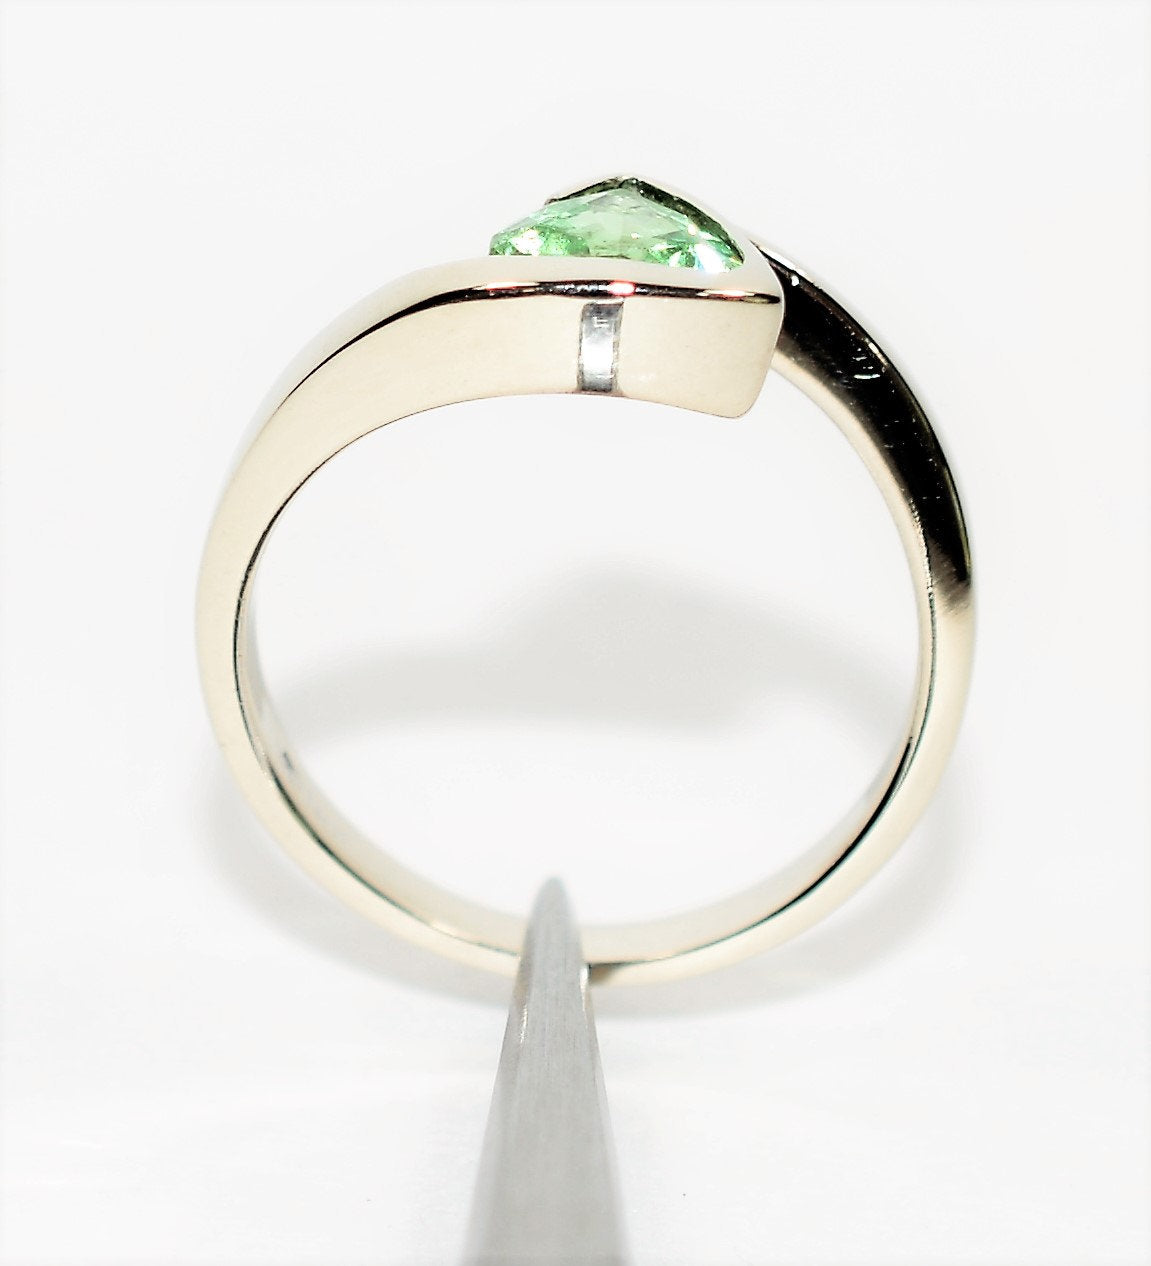 Certified Natural Tsavorite Garnet Ring 14K Solid White Gold 1.05ct Solitaire Ring Gemstone Ring Ladies Ring Women’s Ring January Birthstone